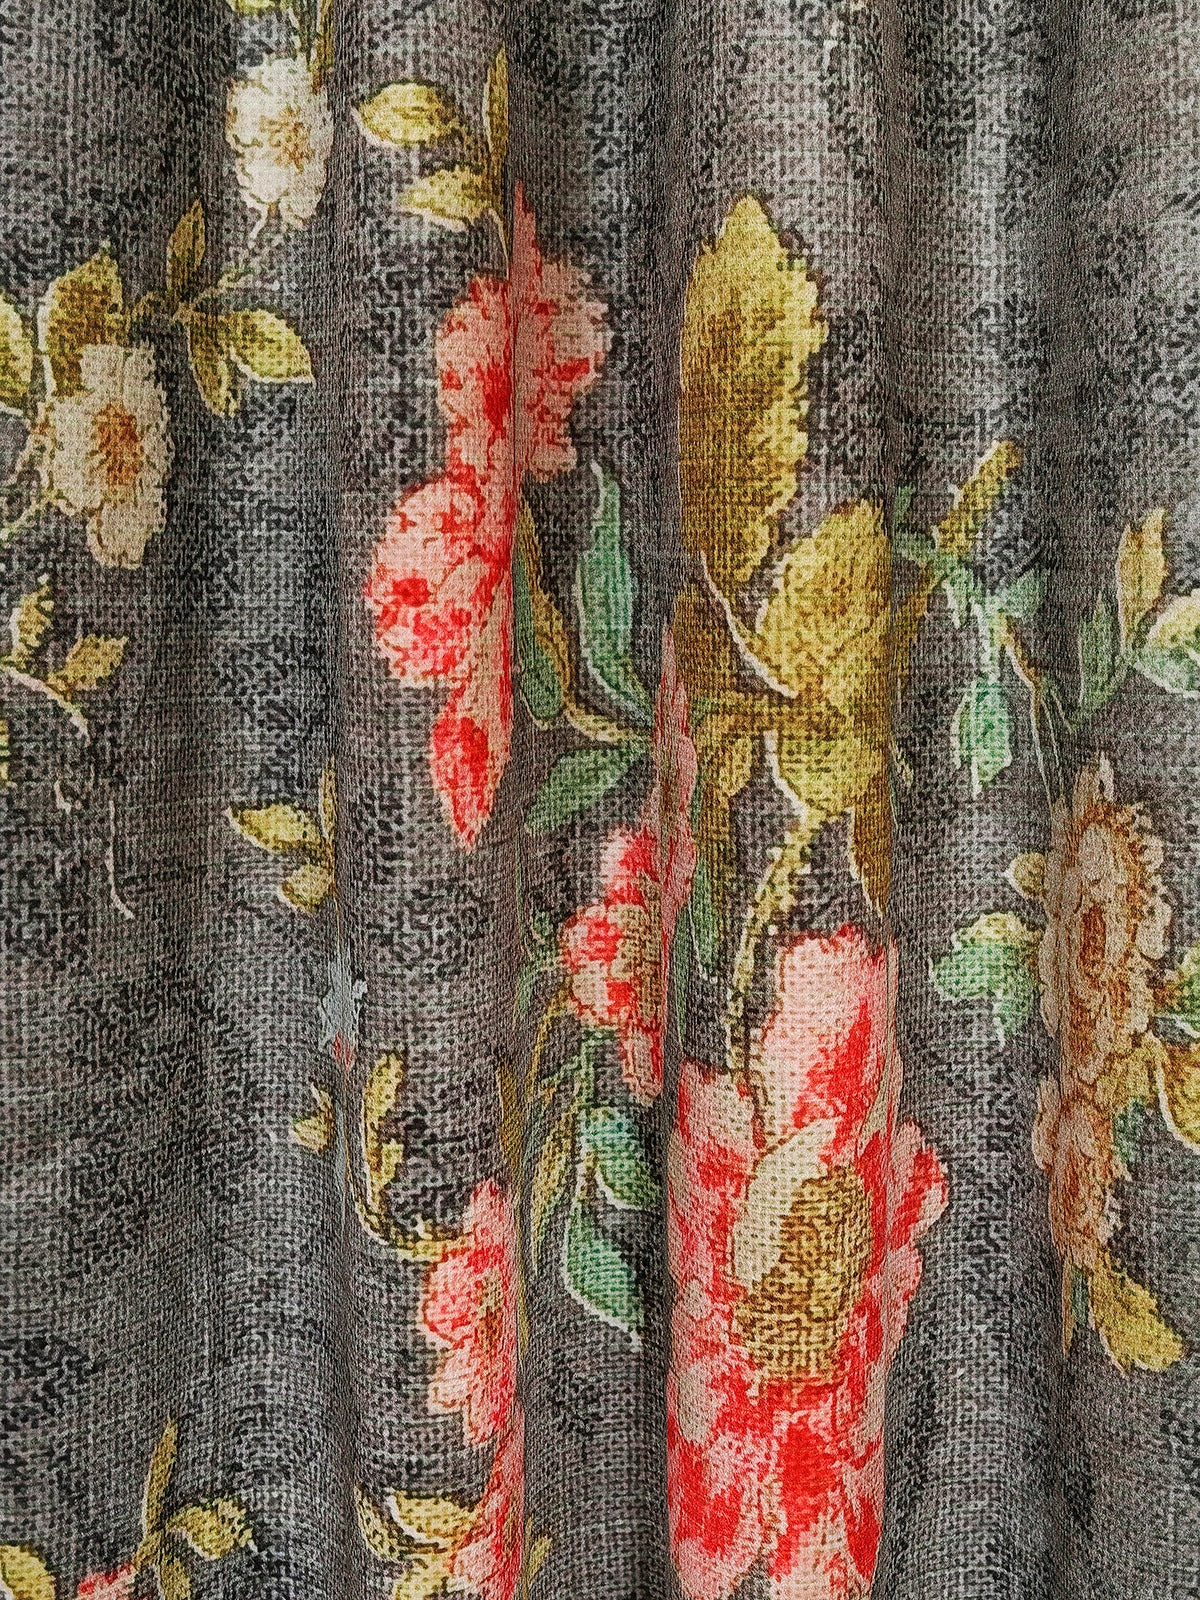 Romee Grey Floral Patterned Set of 1 Door Curtains